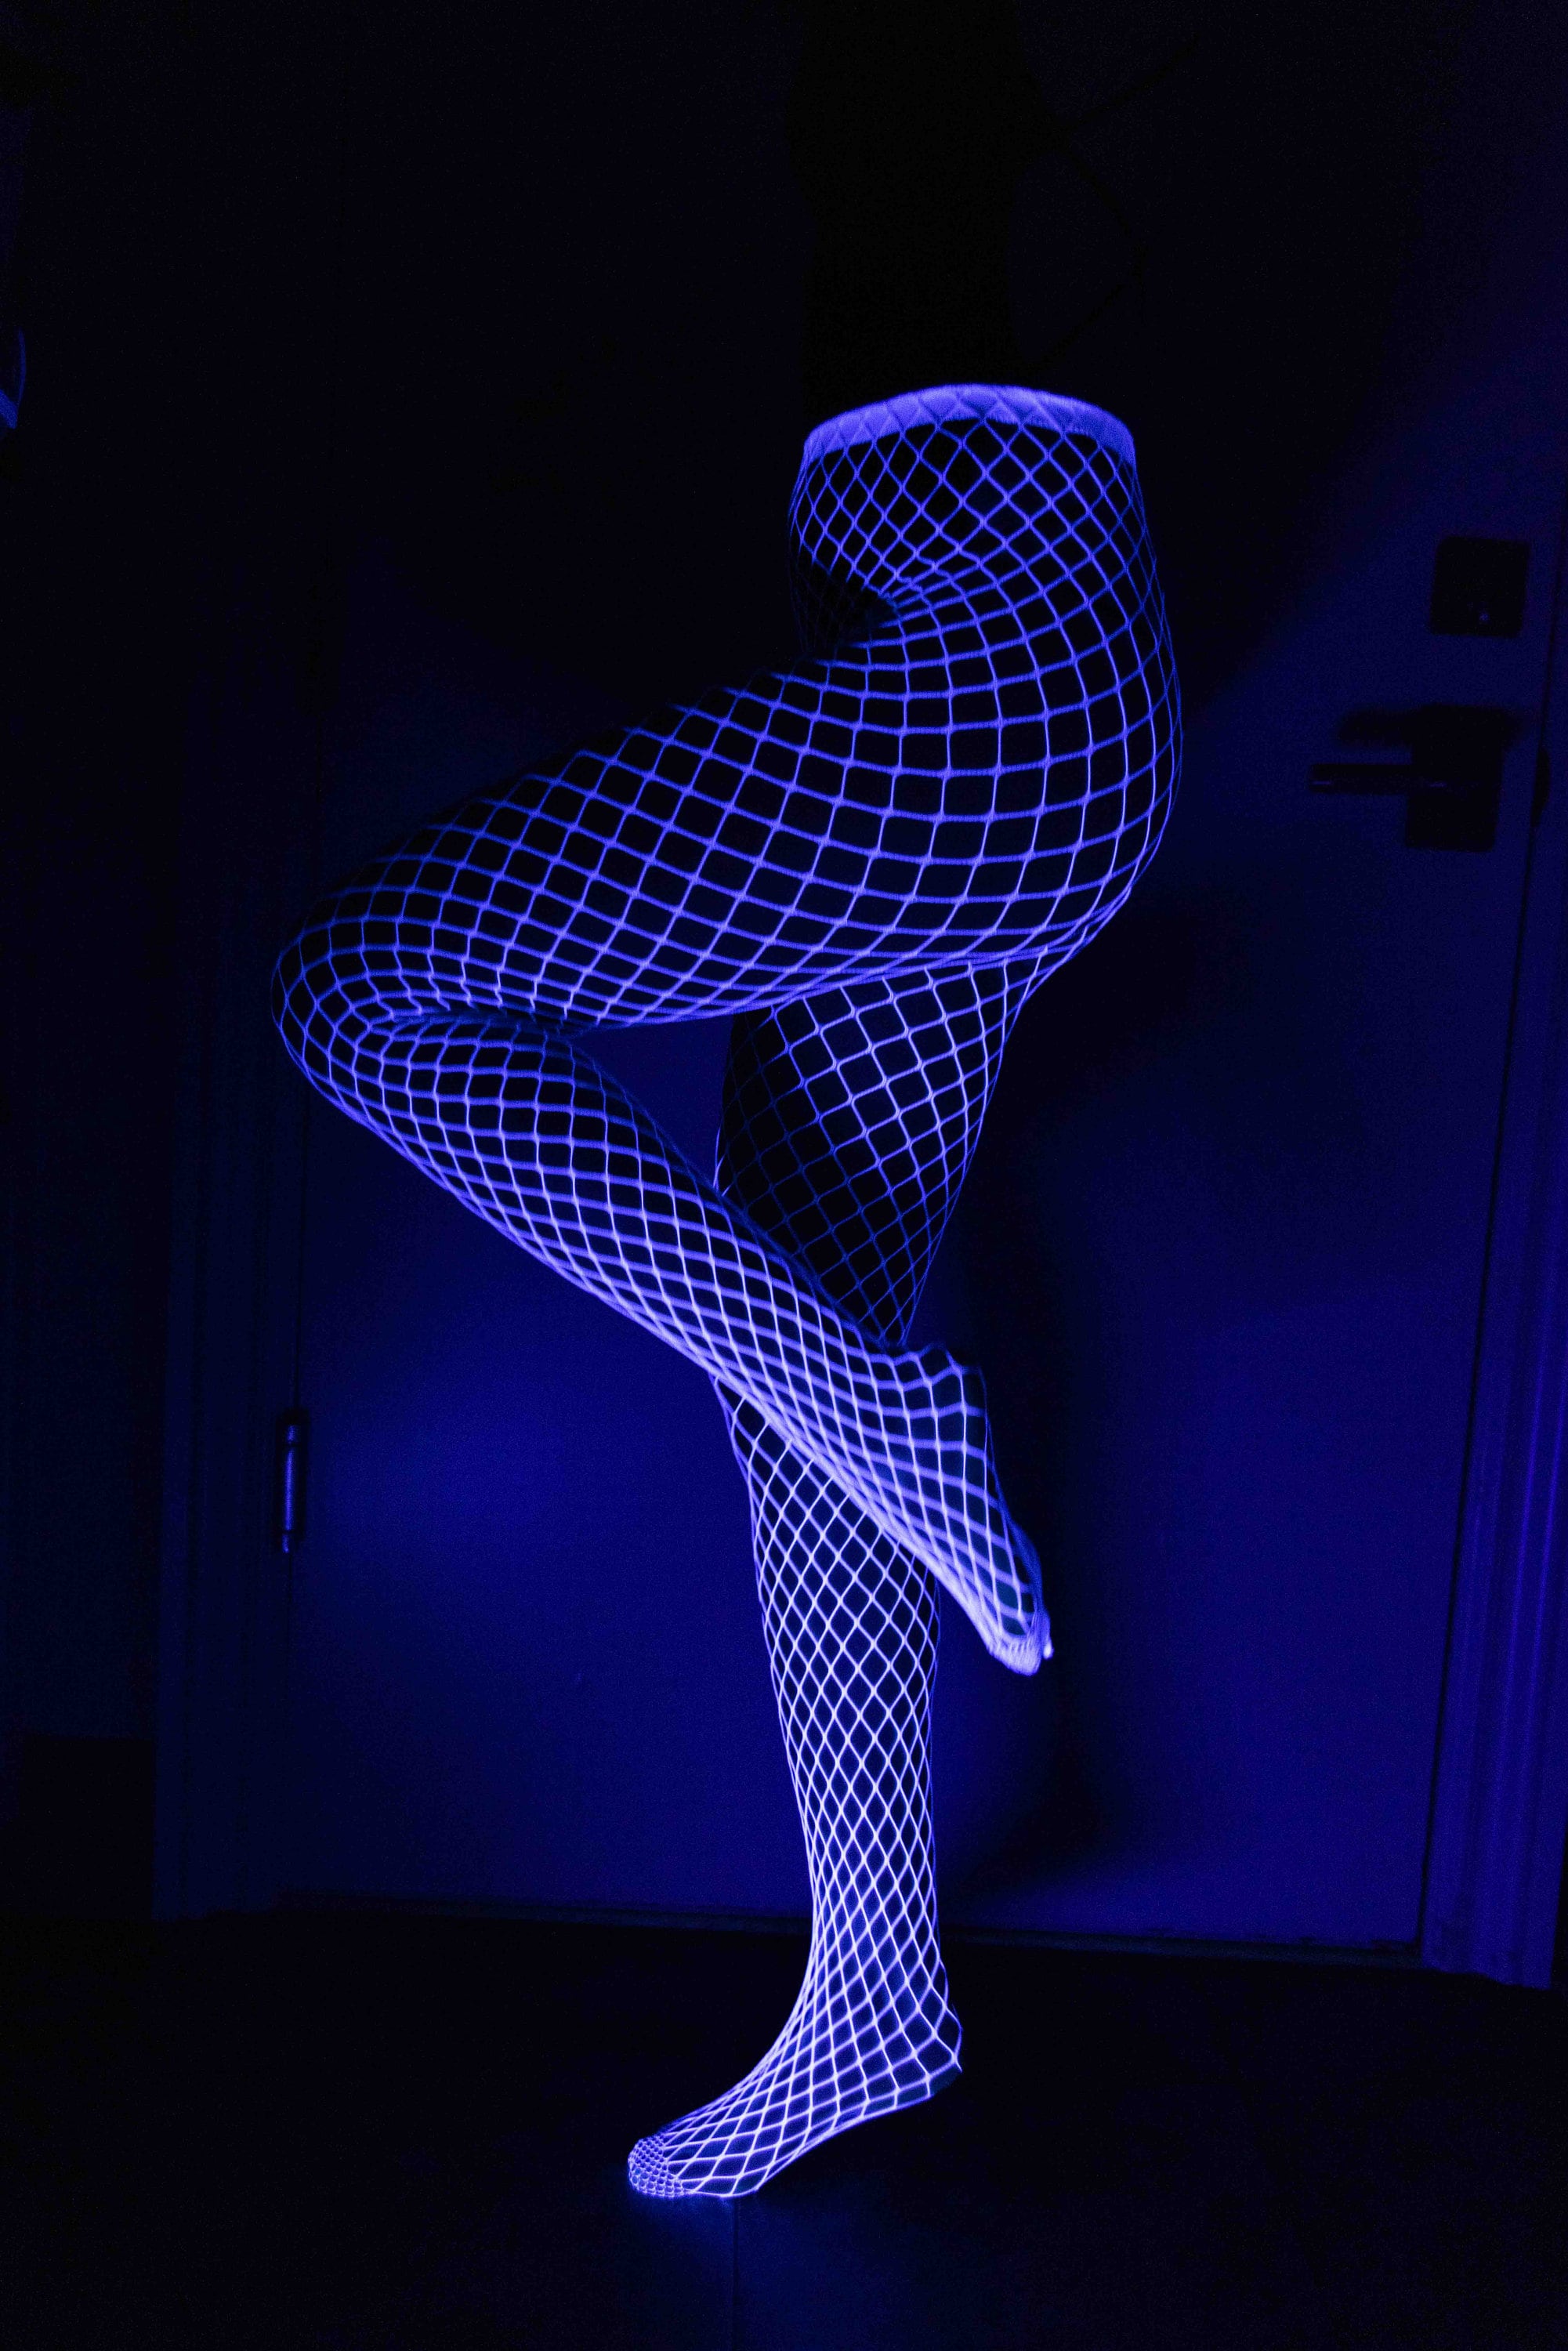 Glow in the dark fishnet stockings leggings, Luminous Glowing Fishnet Socks  Tights High Waist White Fishnet Tights